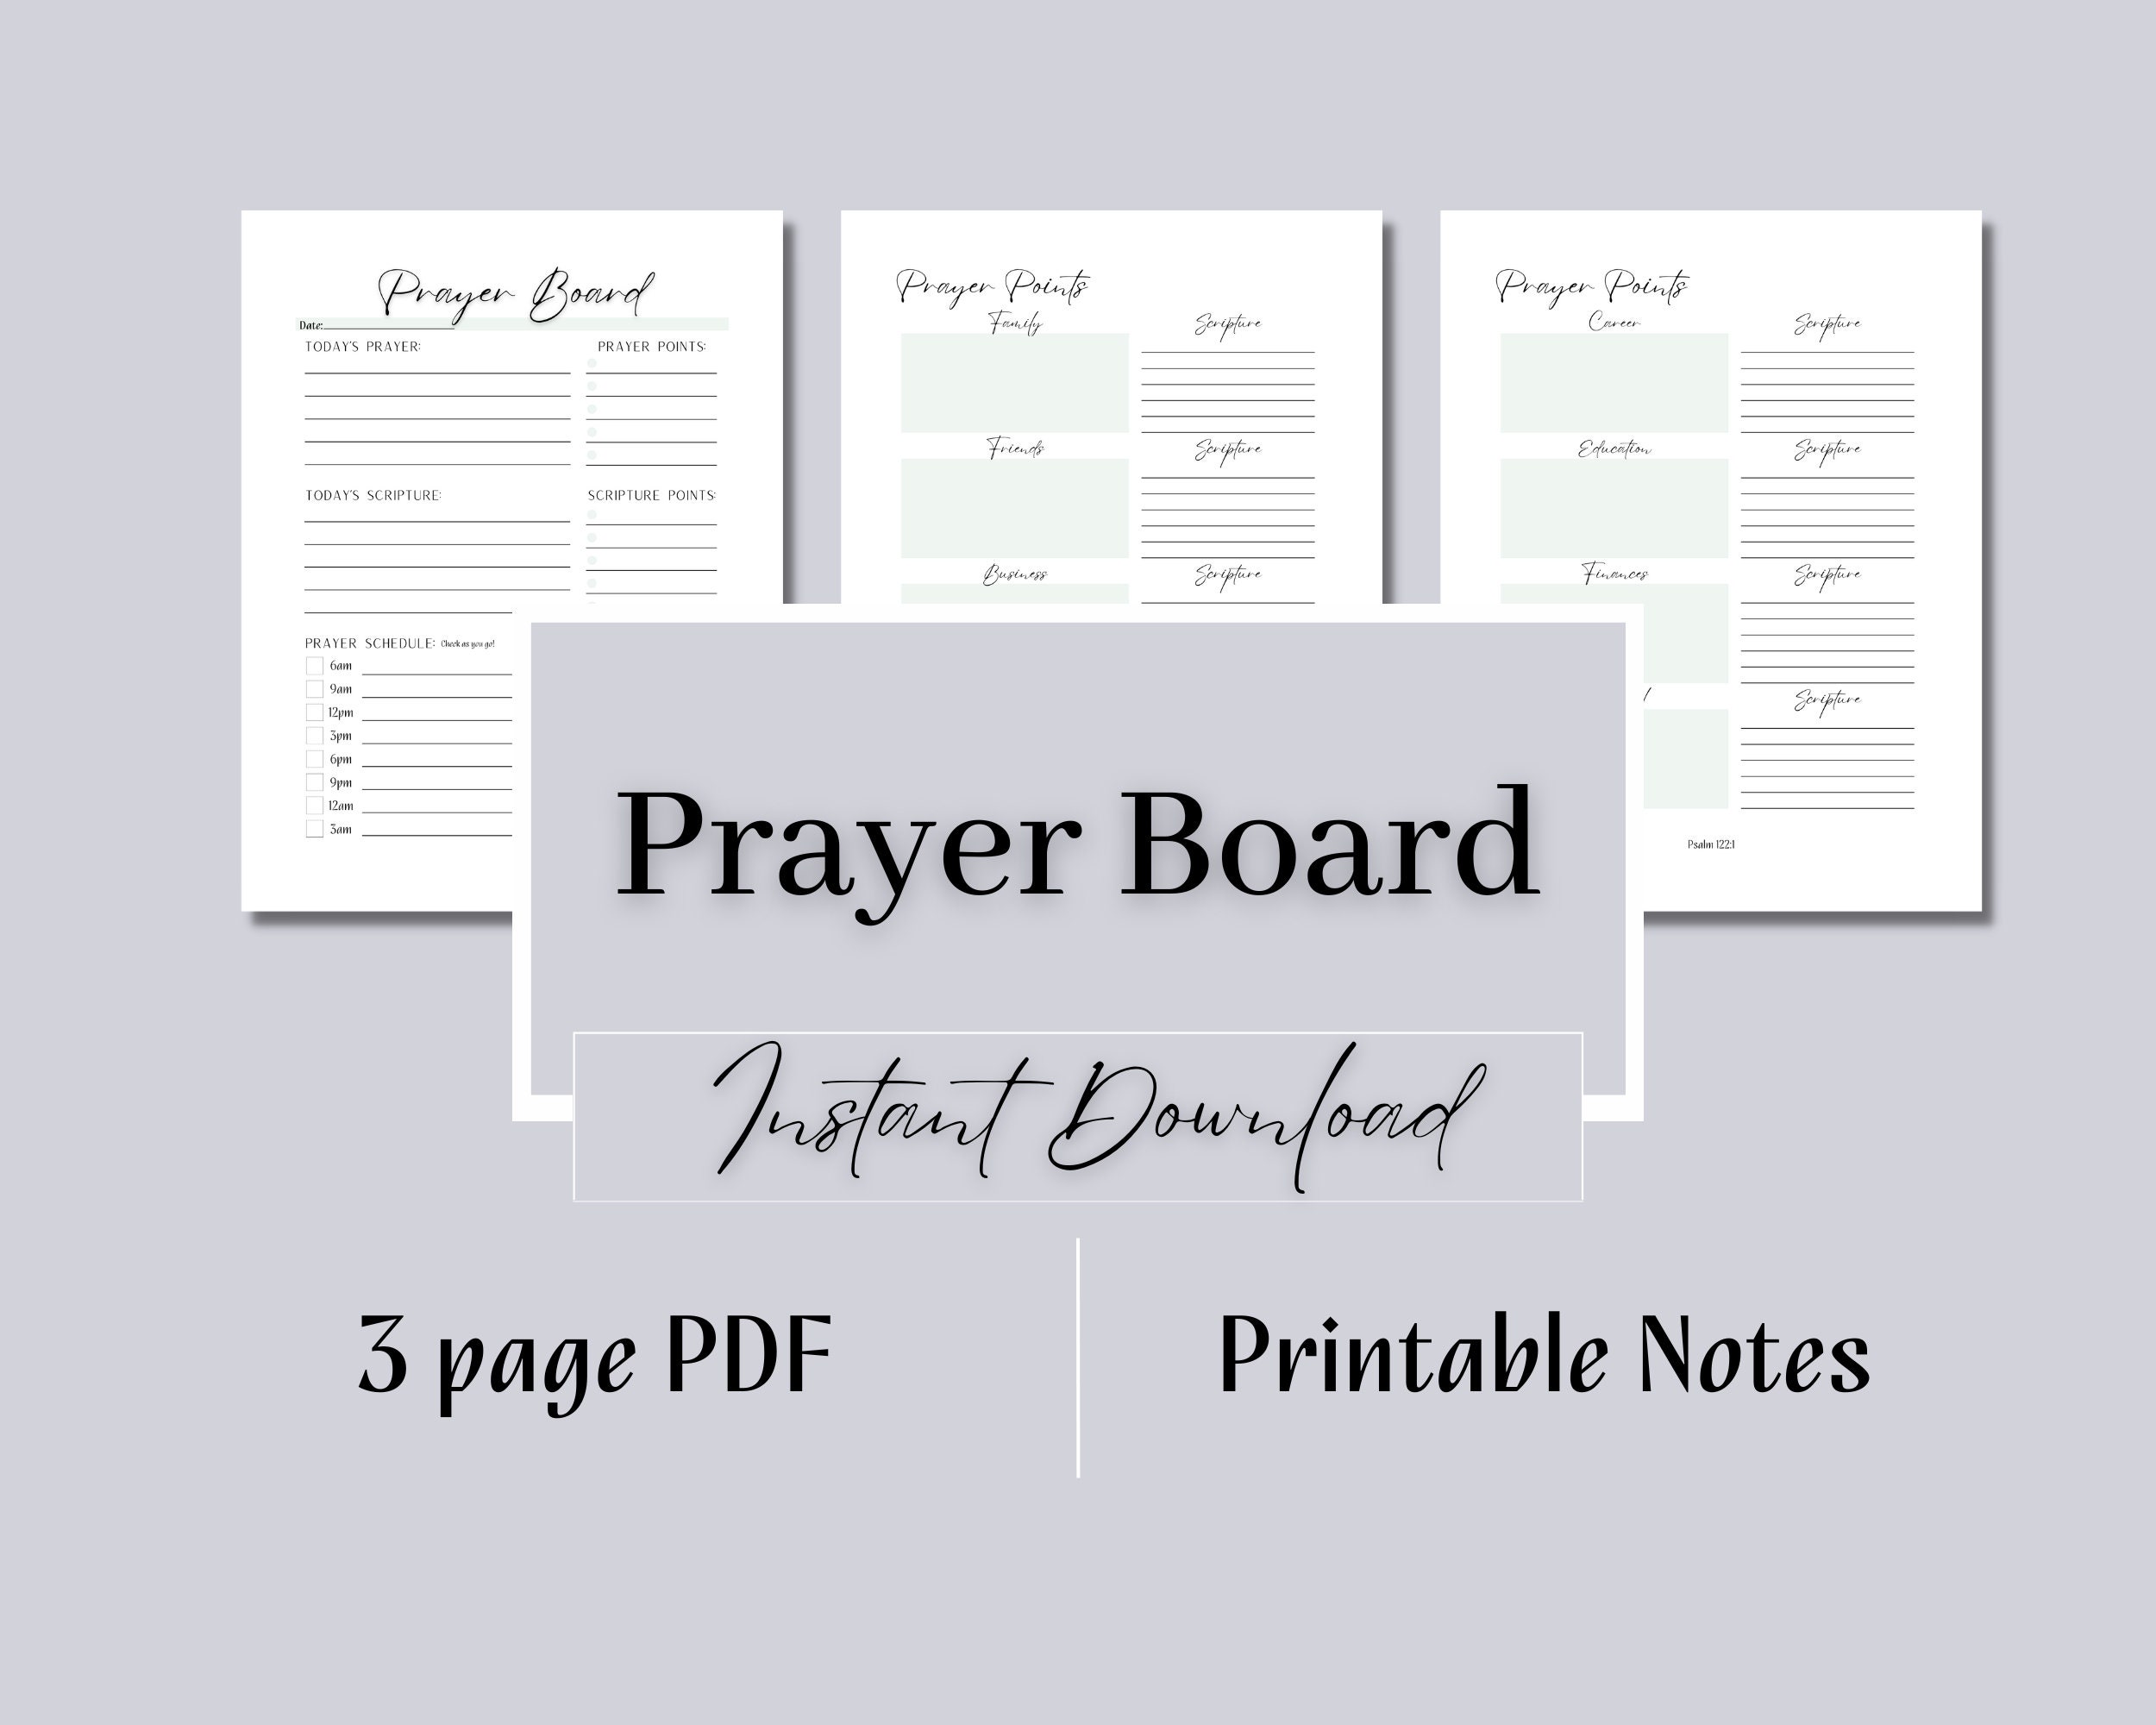 Editable Prayer Board, Prayer Board Kit, Prayer Board Printable, Vision  Board Words, Prayer Request, Prayer Cards, Answered Prayers